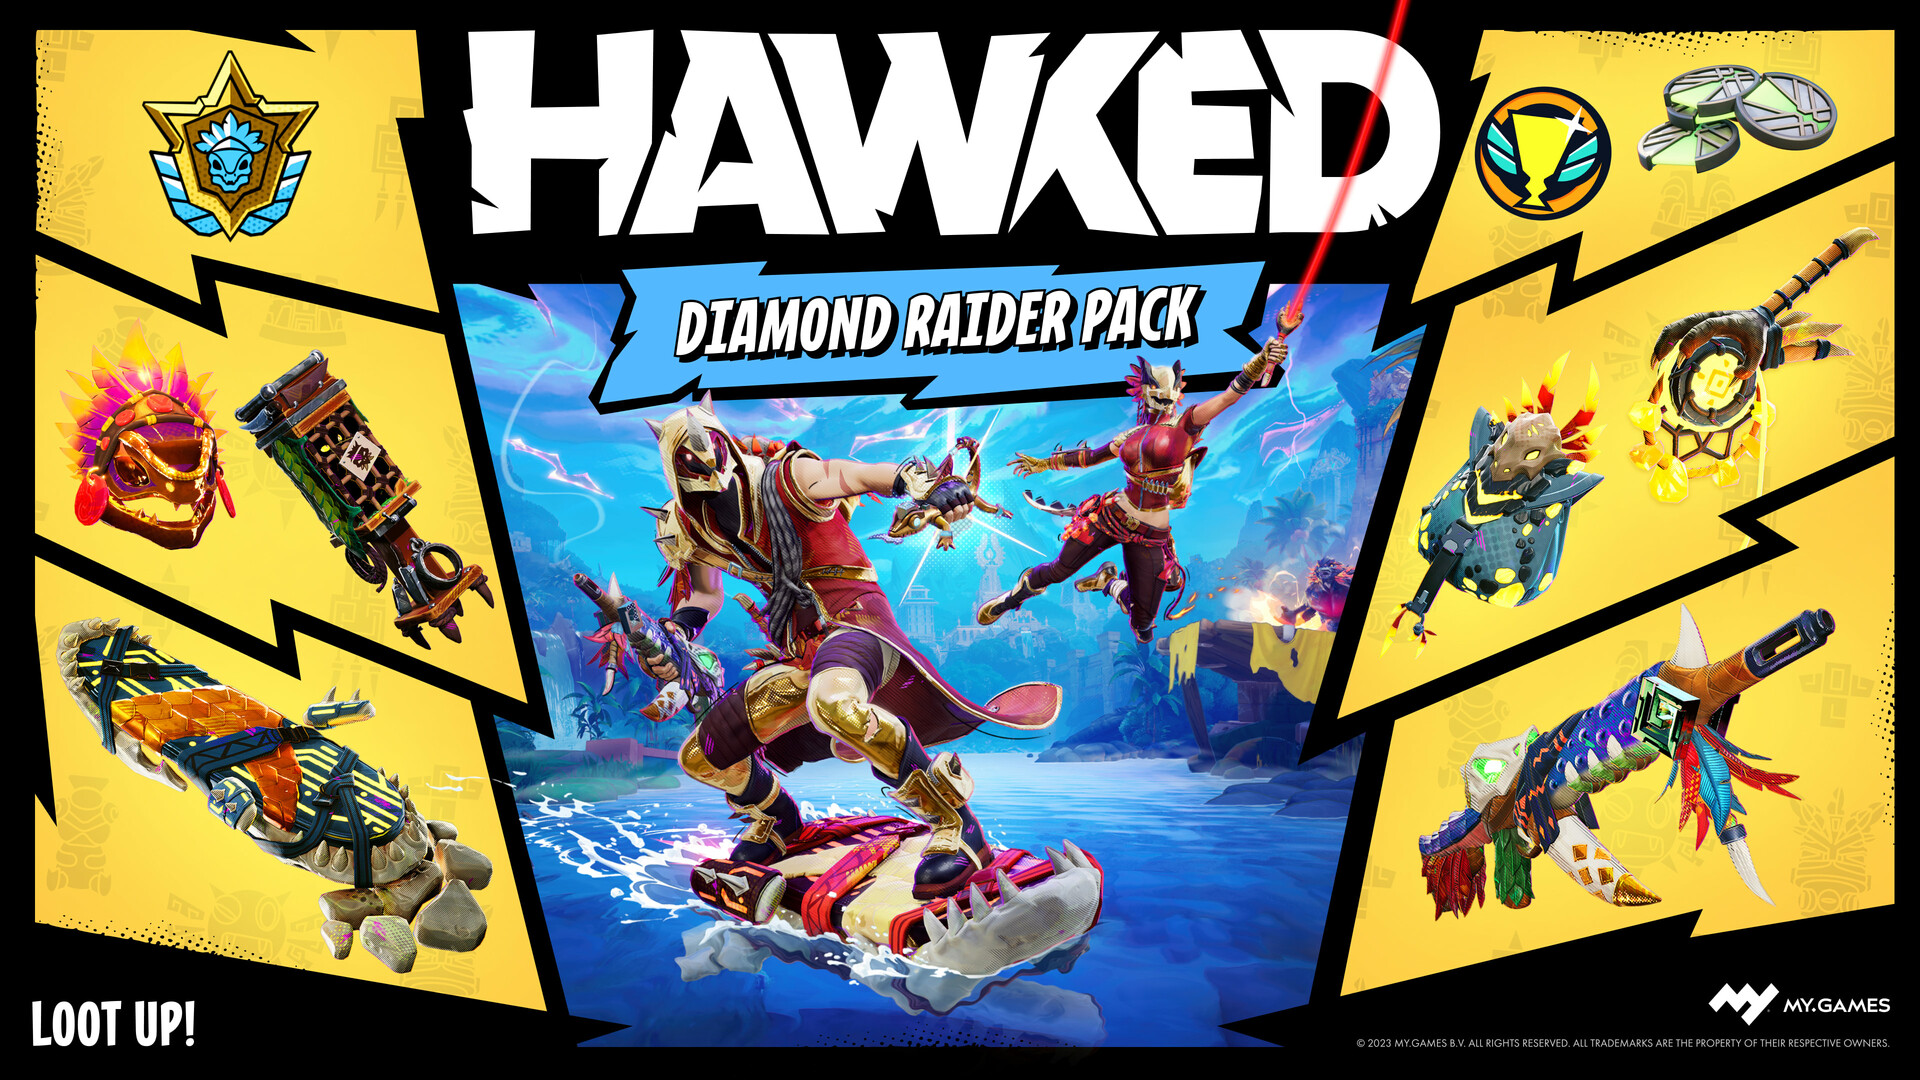 HAWKED — Diamond Raider Pack Featured Screenshot #1